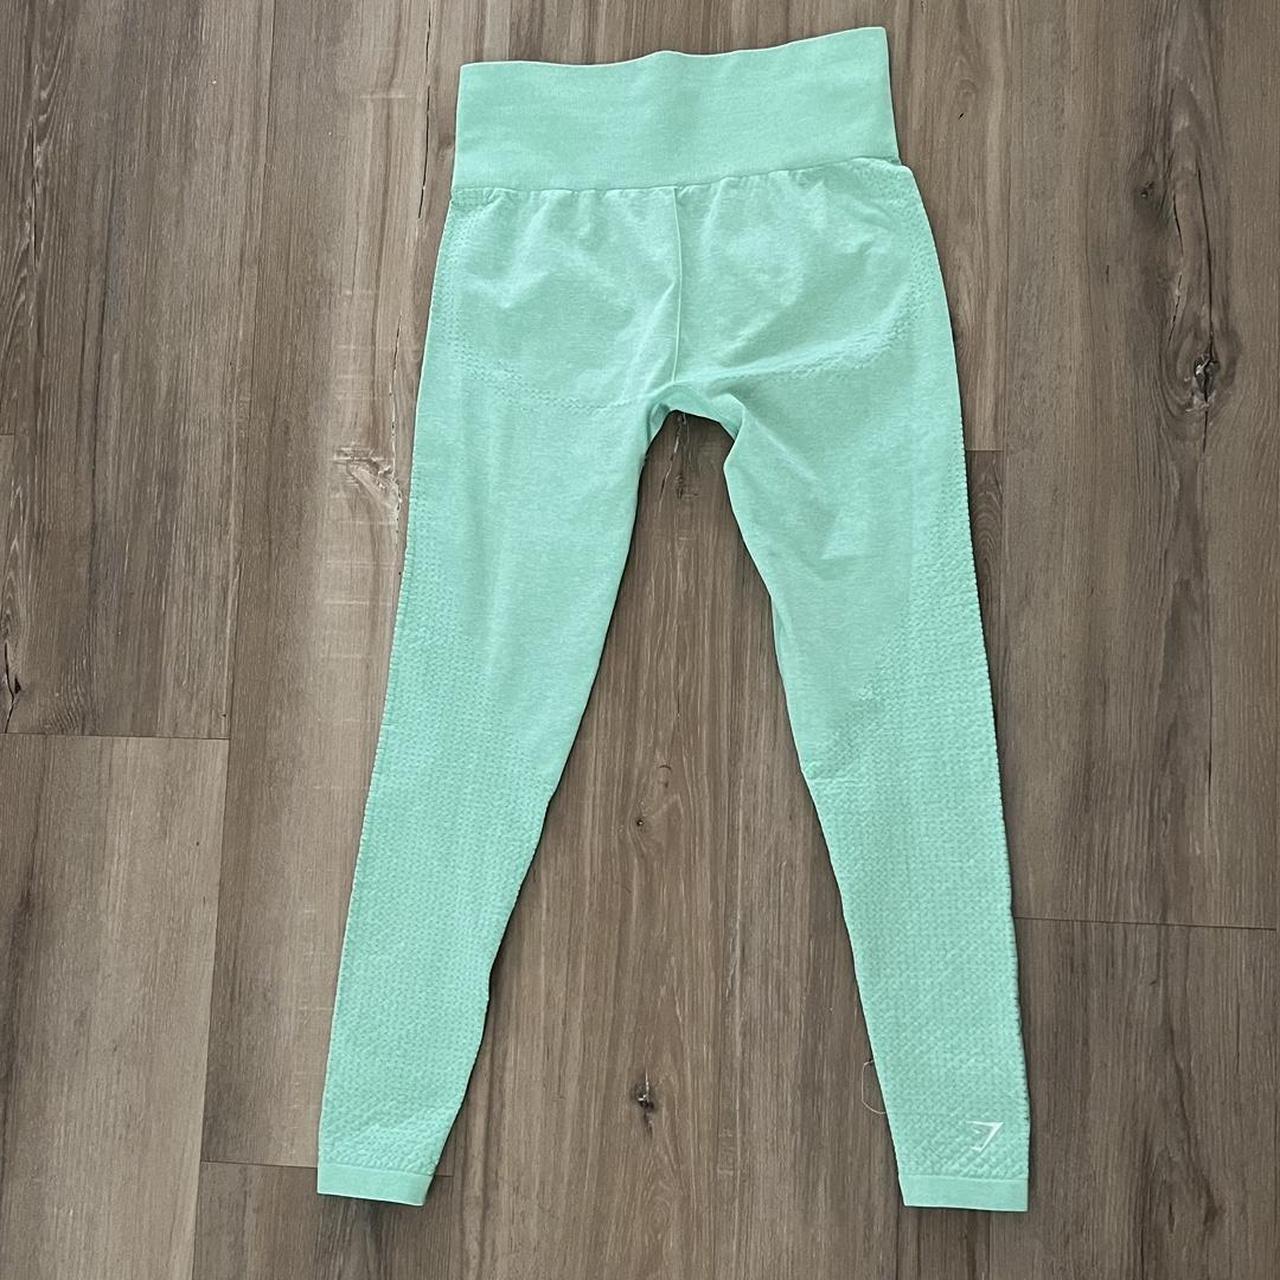 Bright aqua green GYMSHARK leggings - size extra